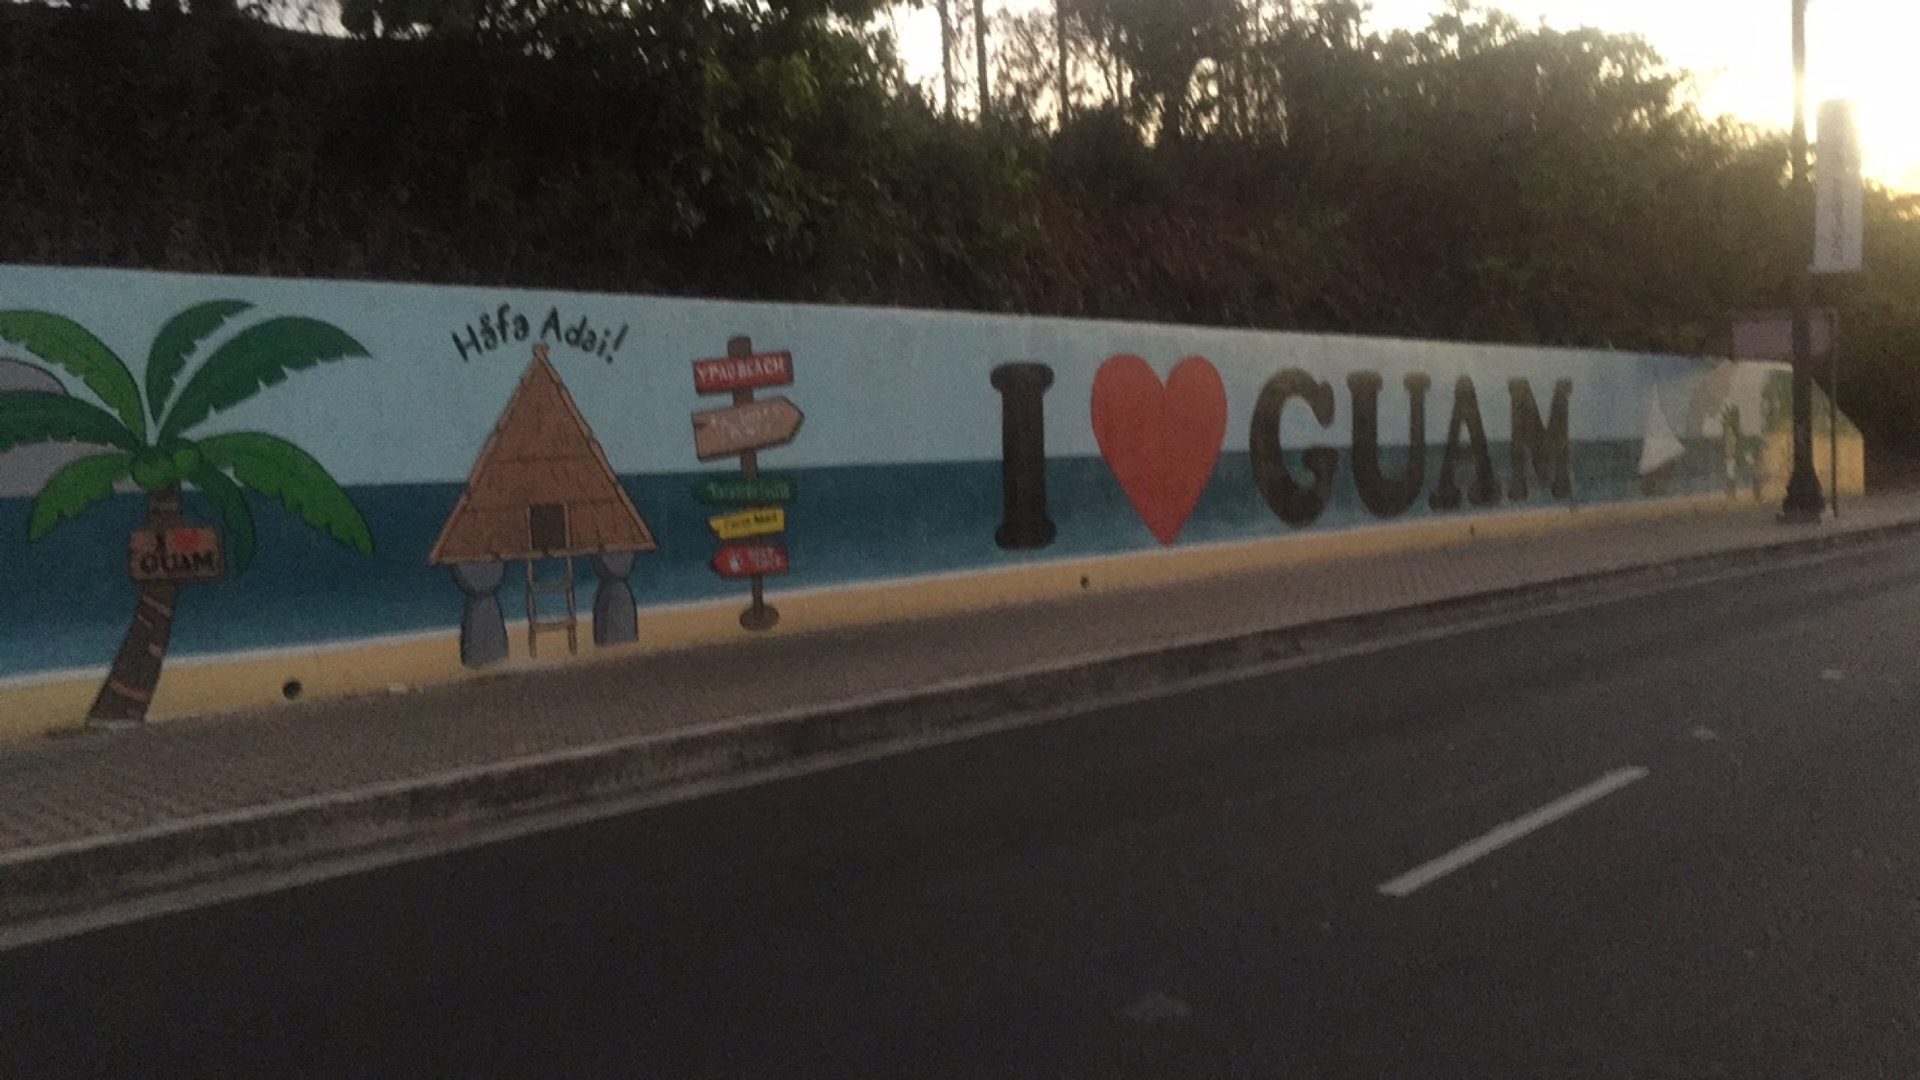 Street art in Guam, USA. Enjoying the beaches of Guam